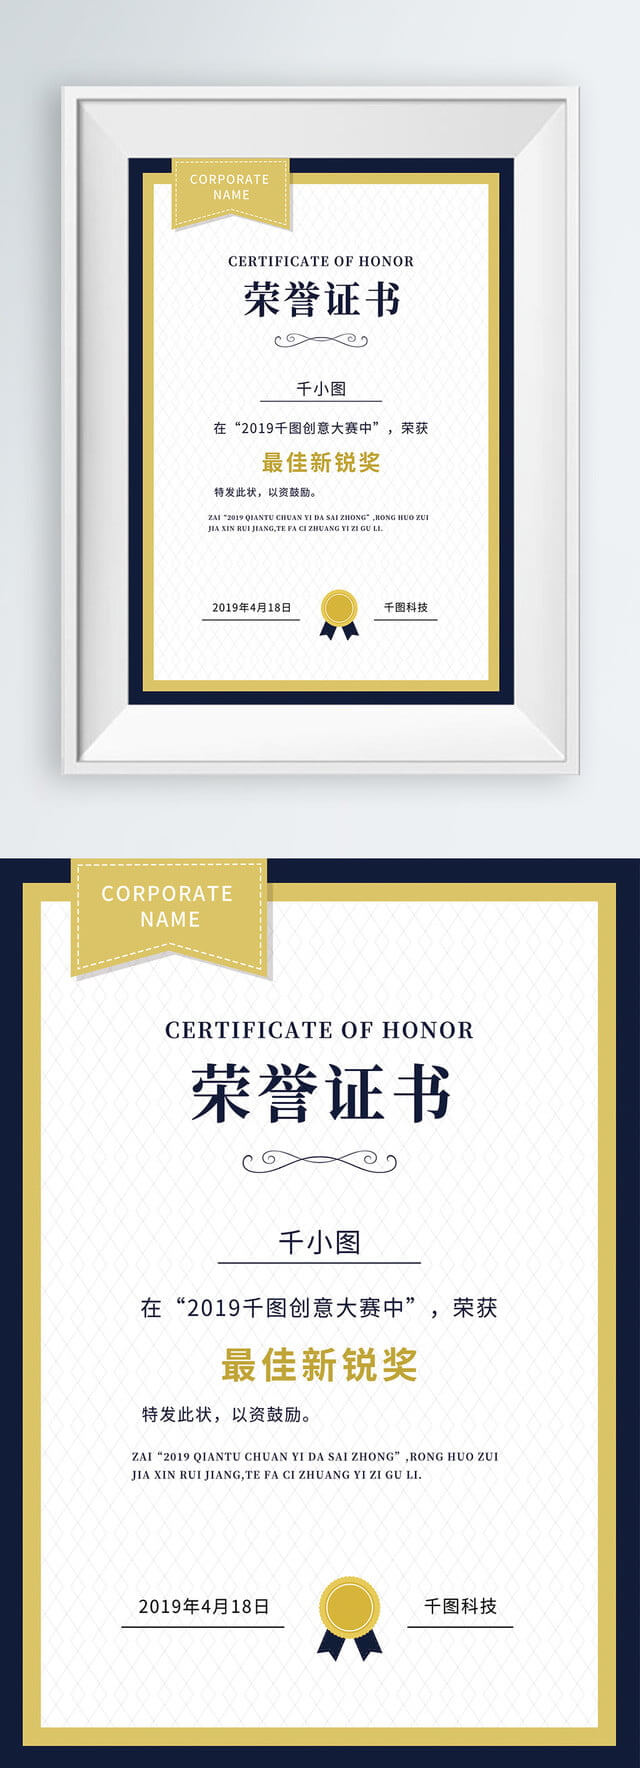 Certificate Authorization Certificate Certificate Of Honor Inside Certificate Of Authorization Template